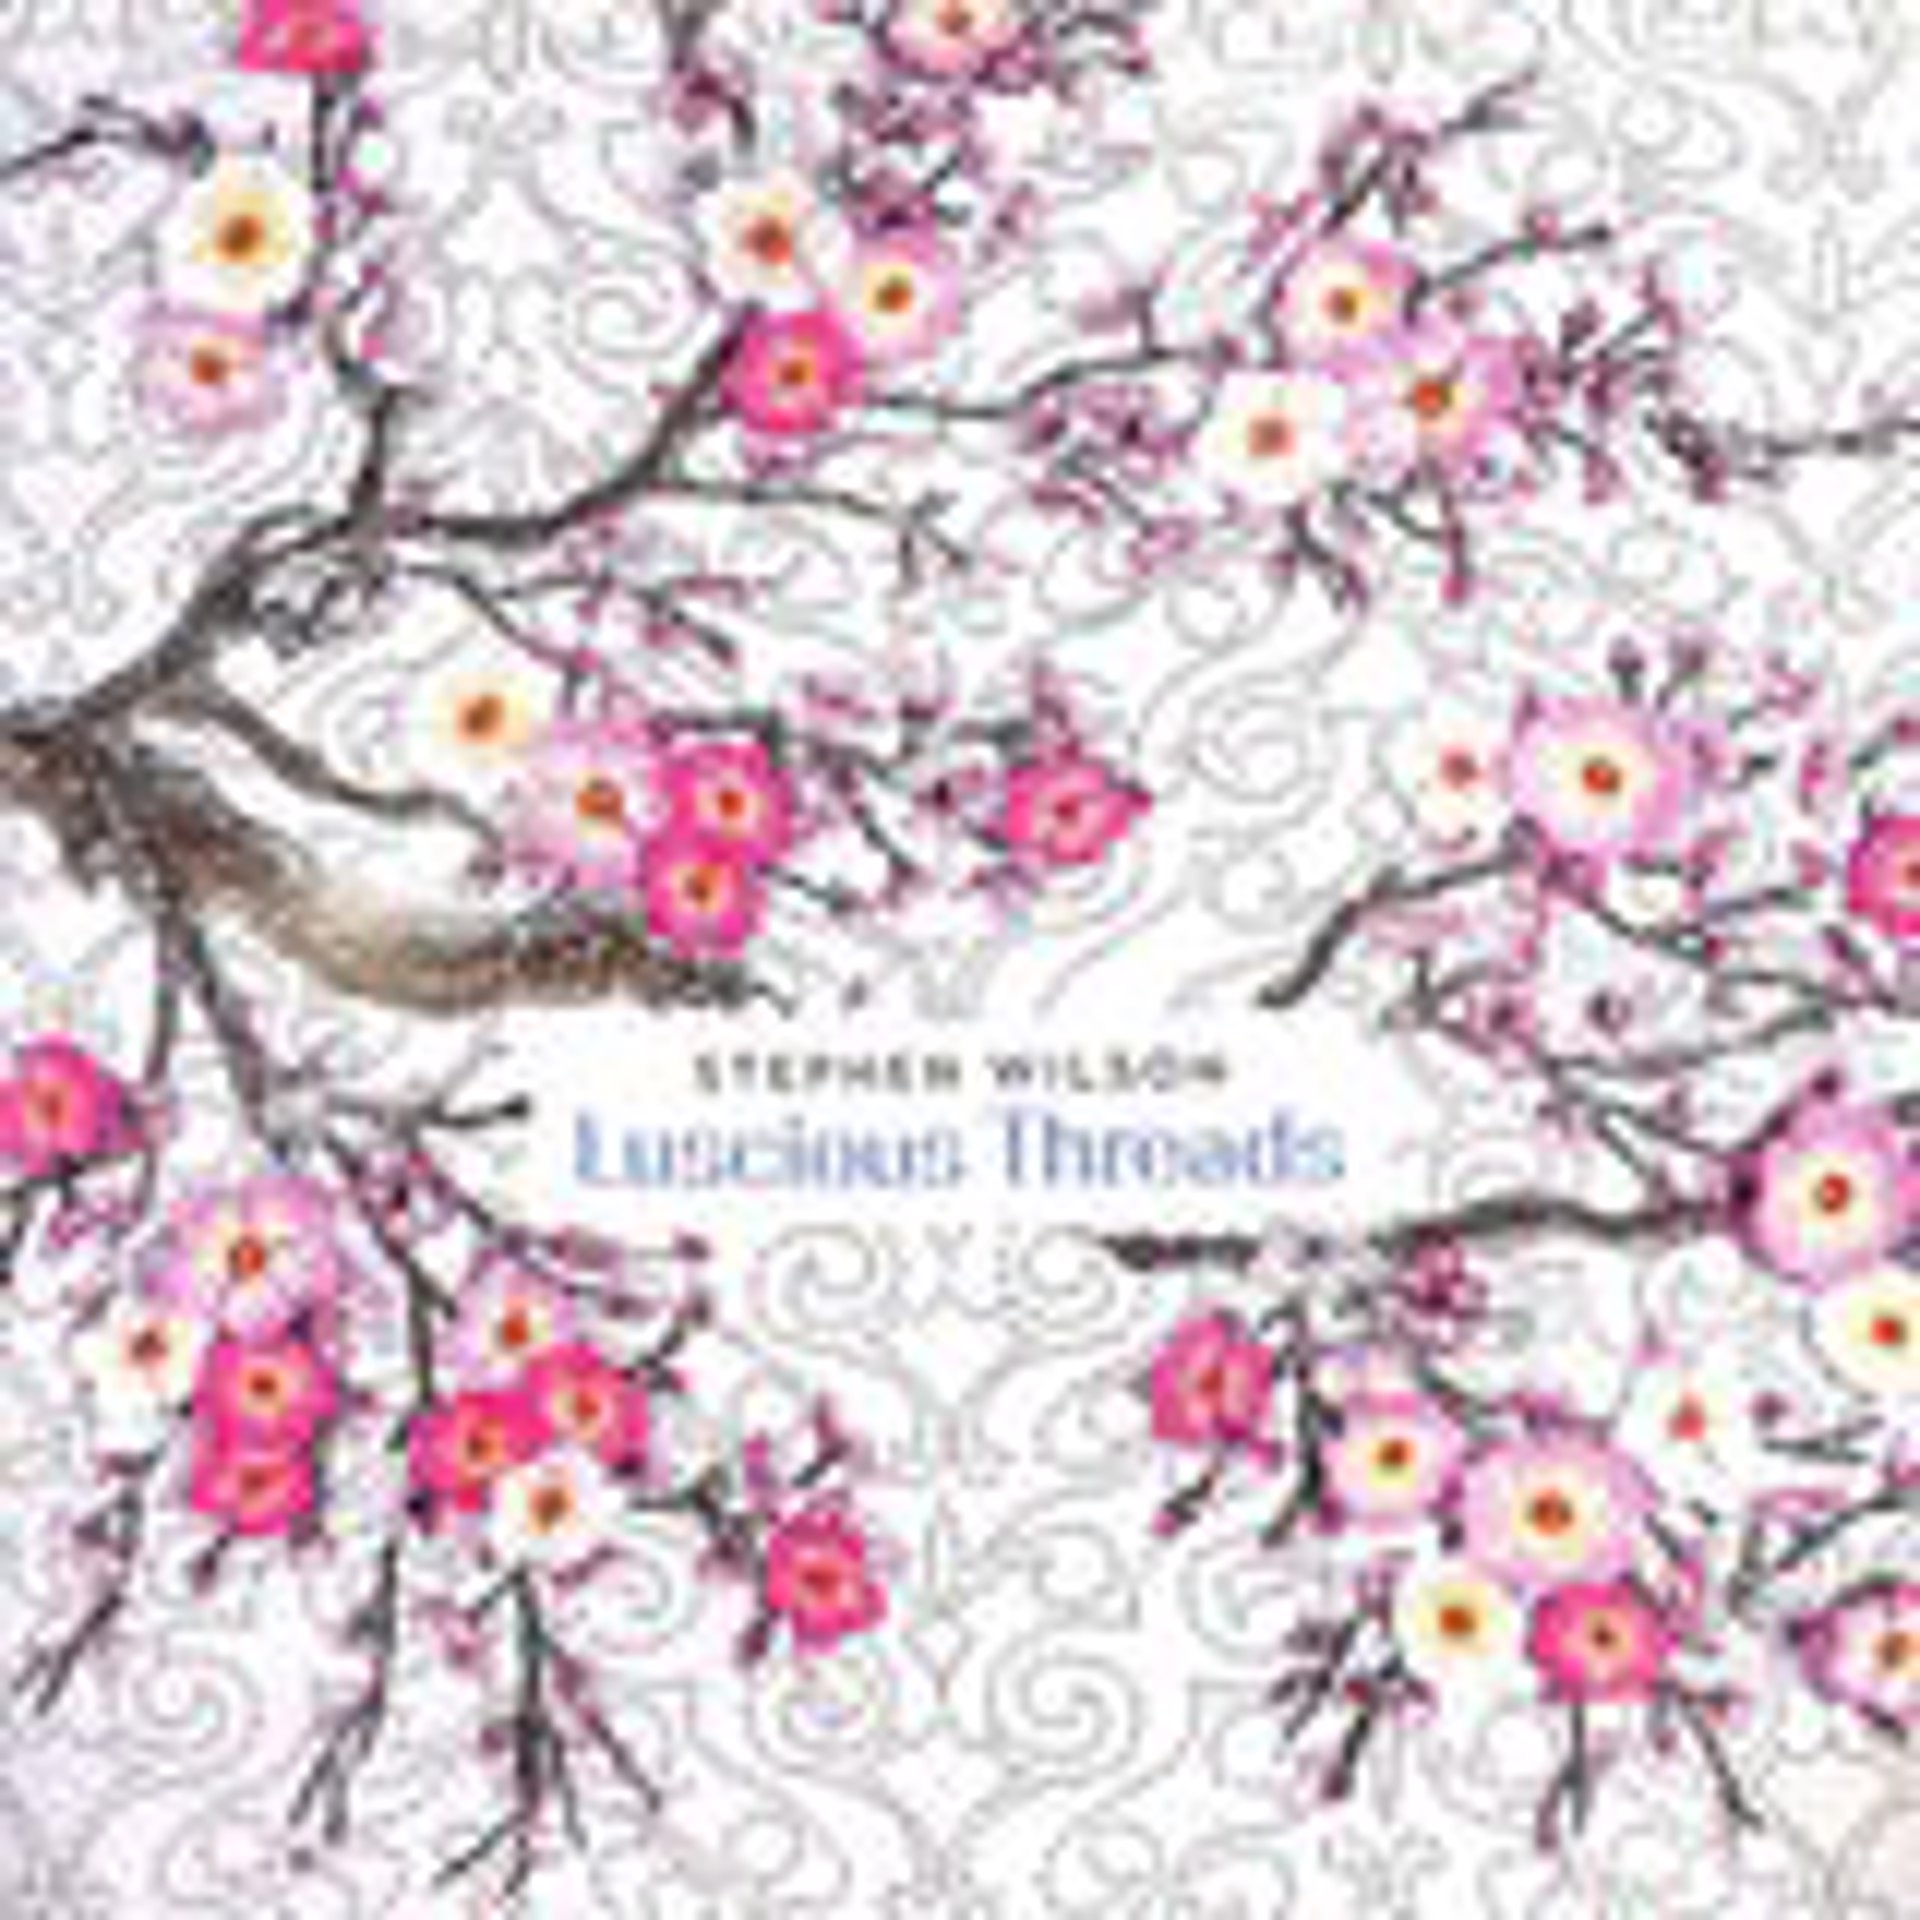 Luscious Threads by Stephen Wilson